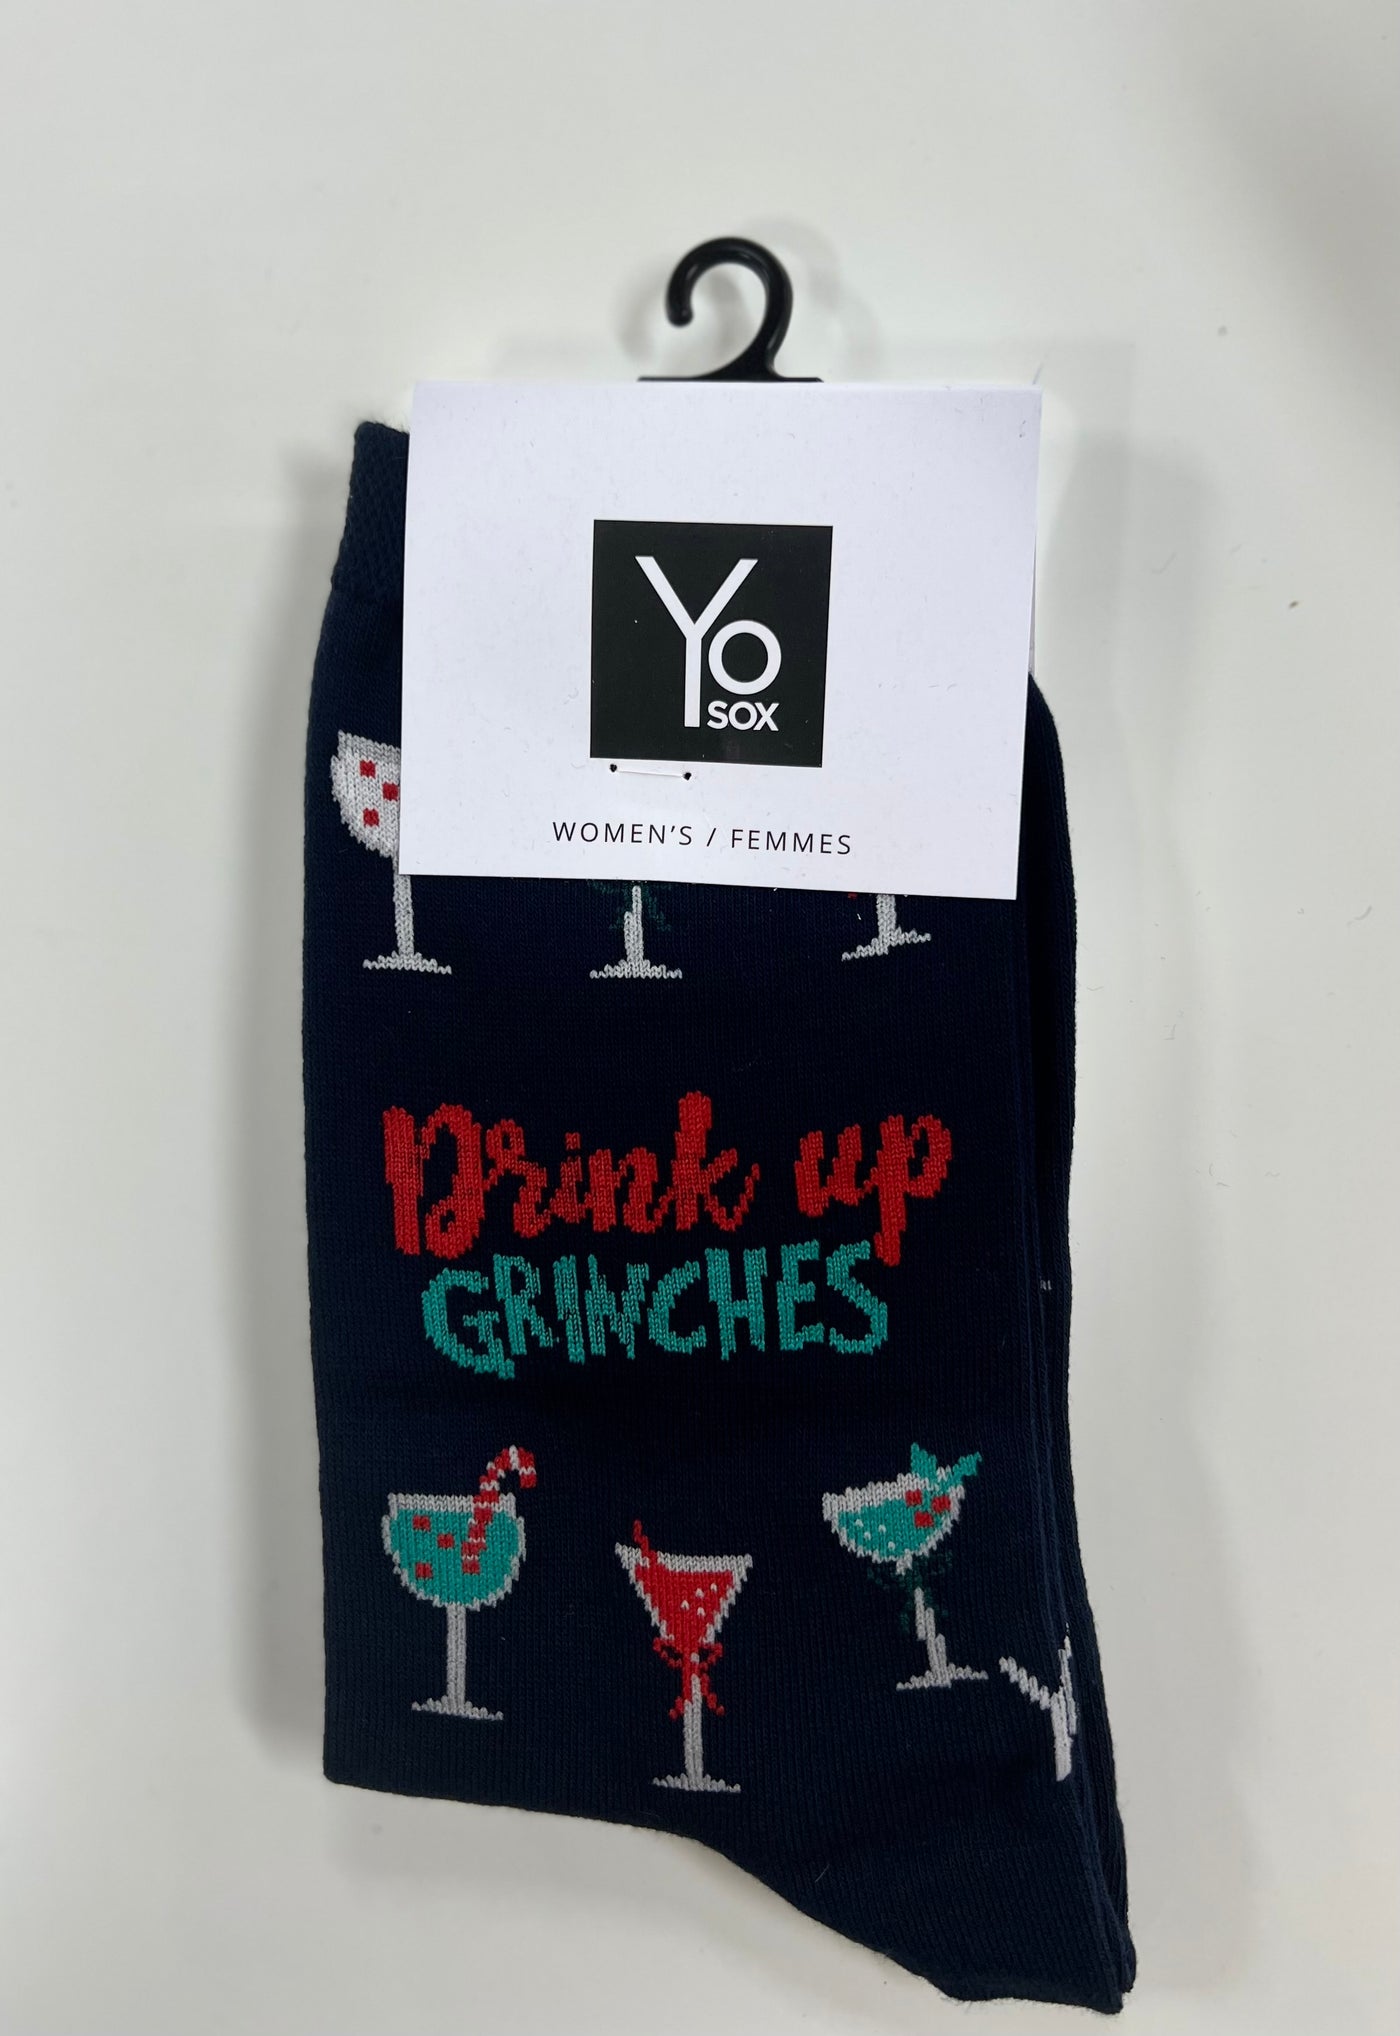 "Drink up Grinches" Cotton Crew Socks by YO Sox - Medium